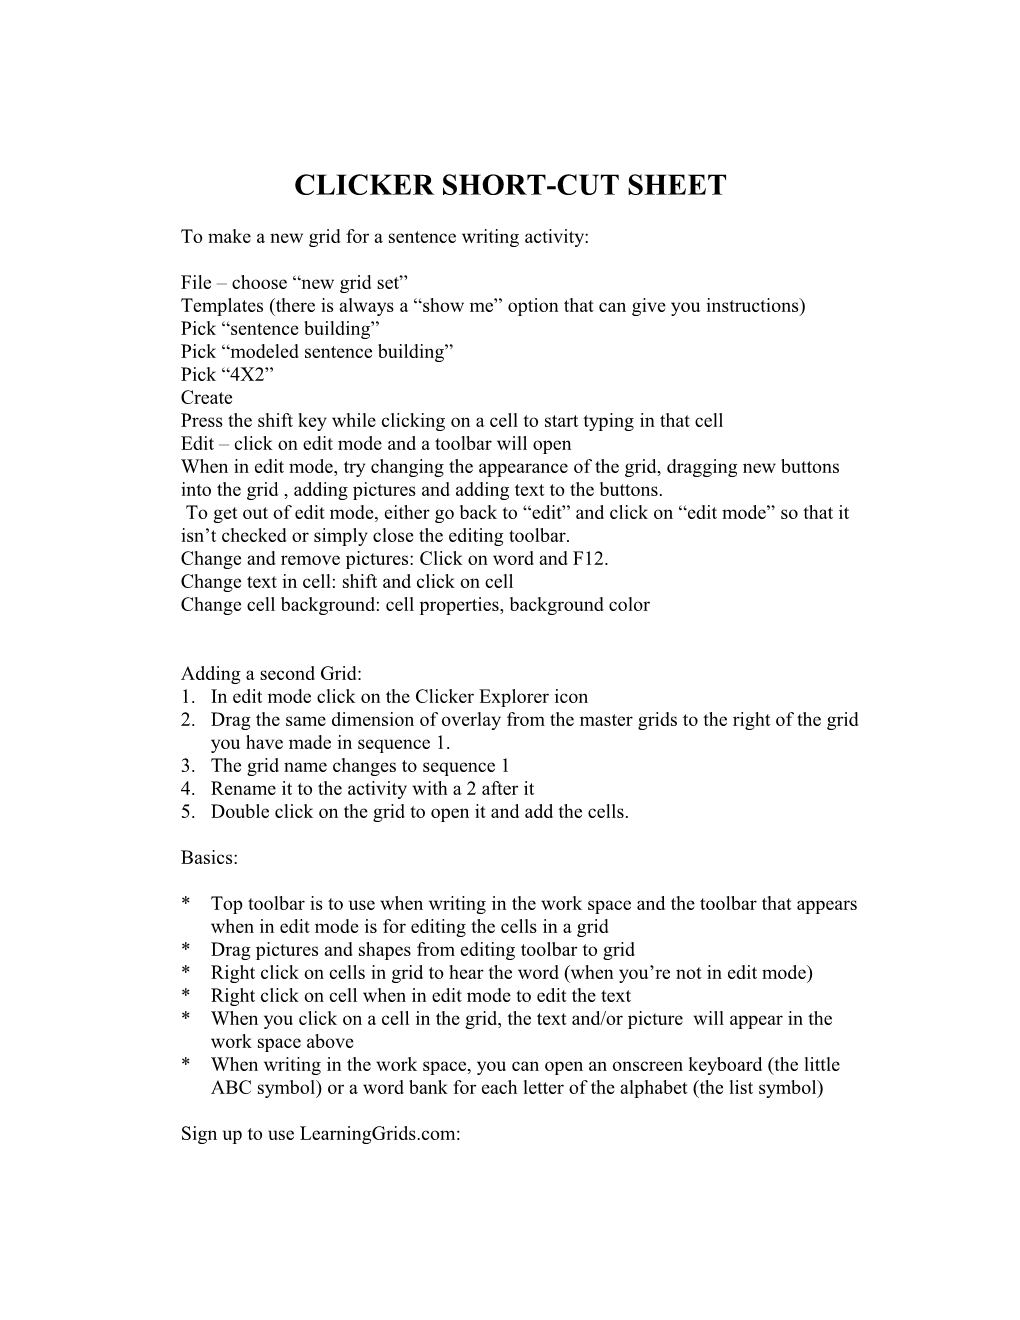 Clicker Short-Cut Sheet